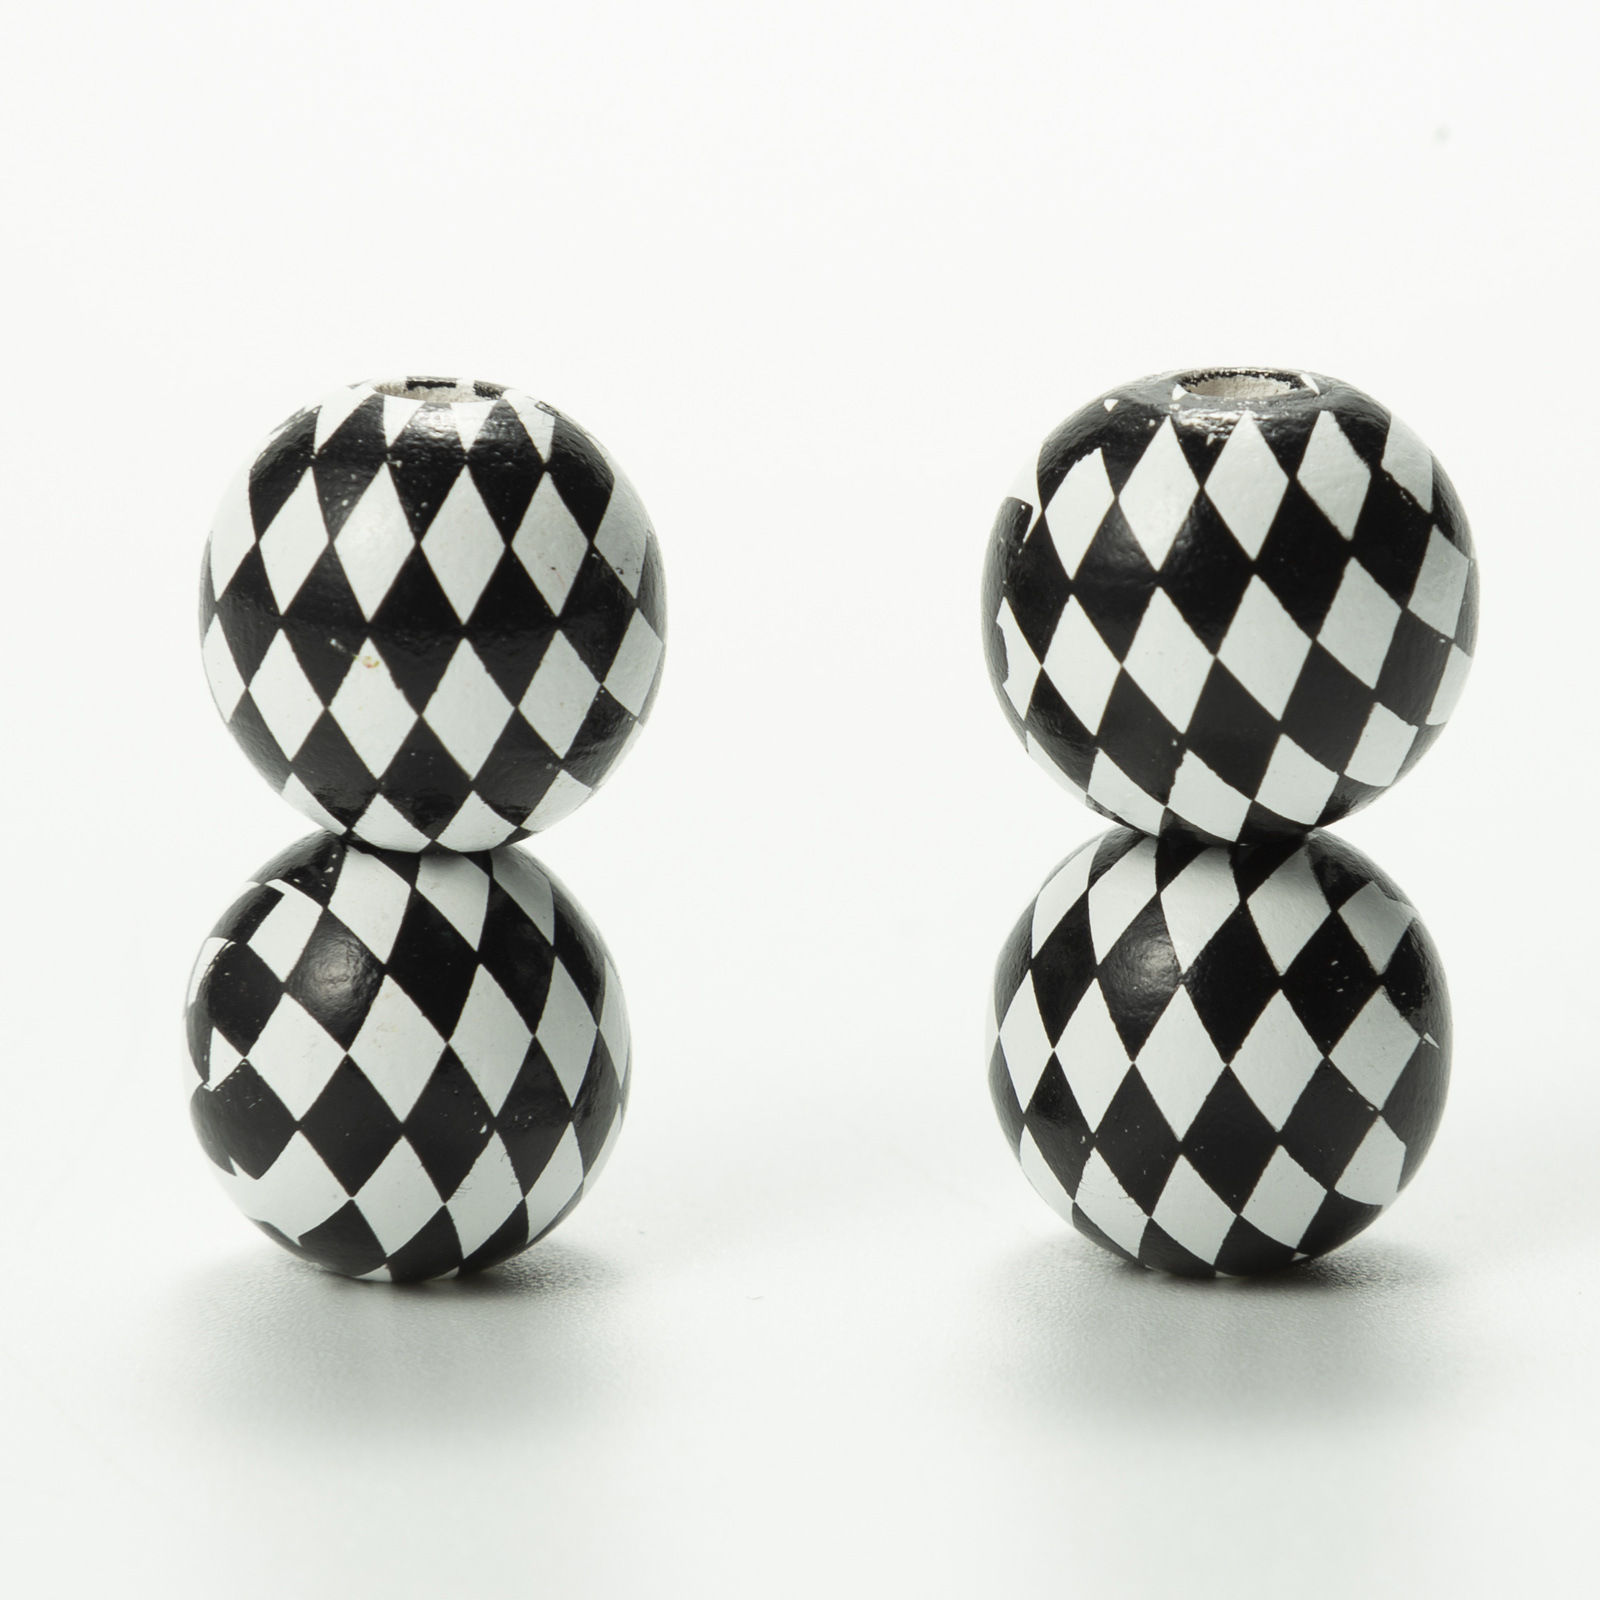 1:Black and white diamond beads